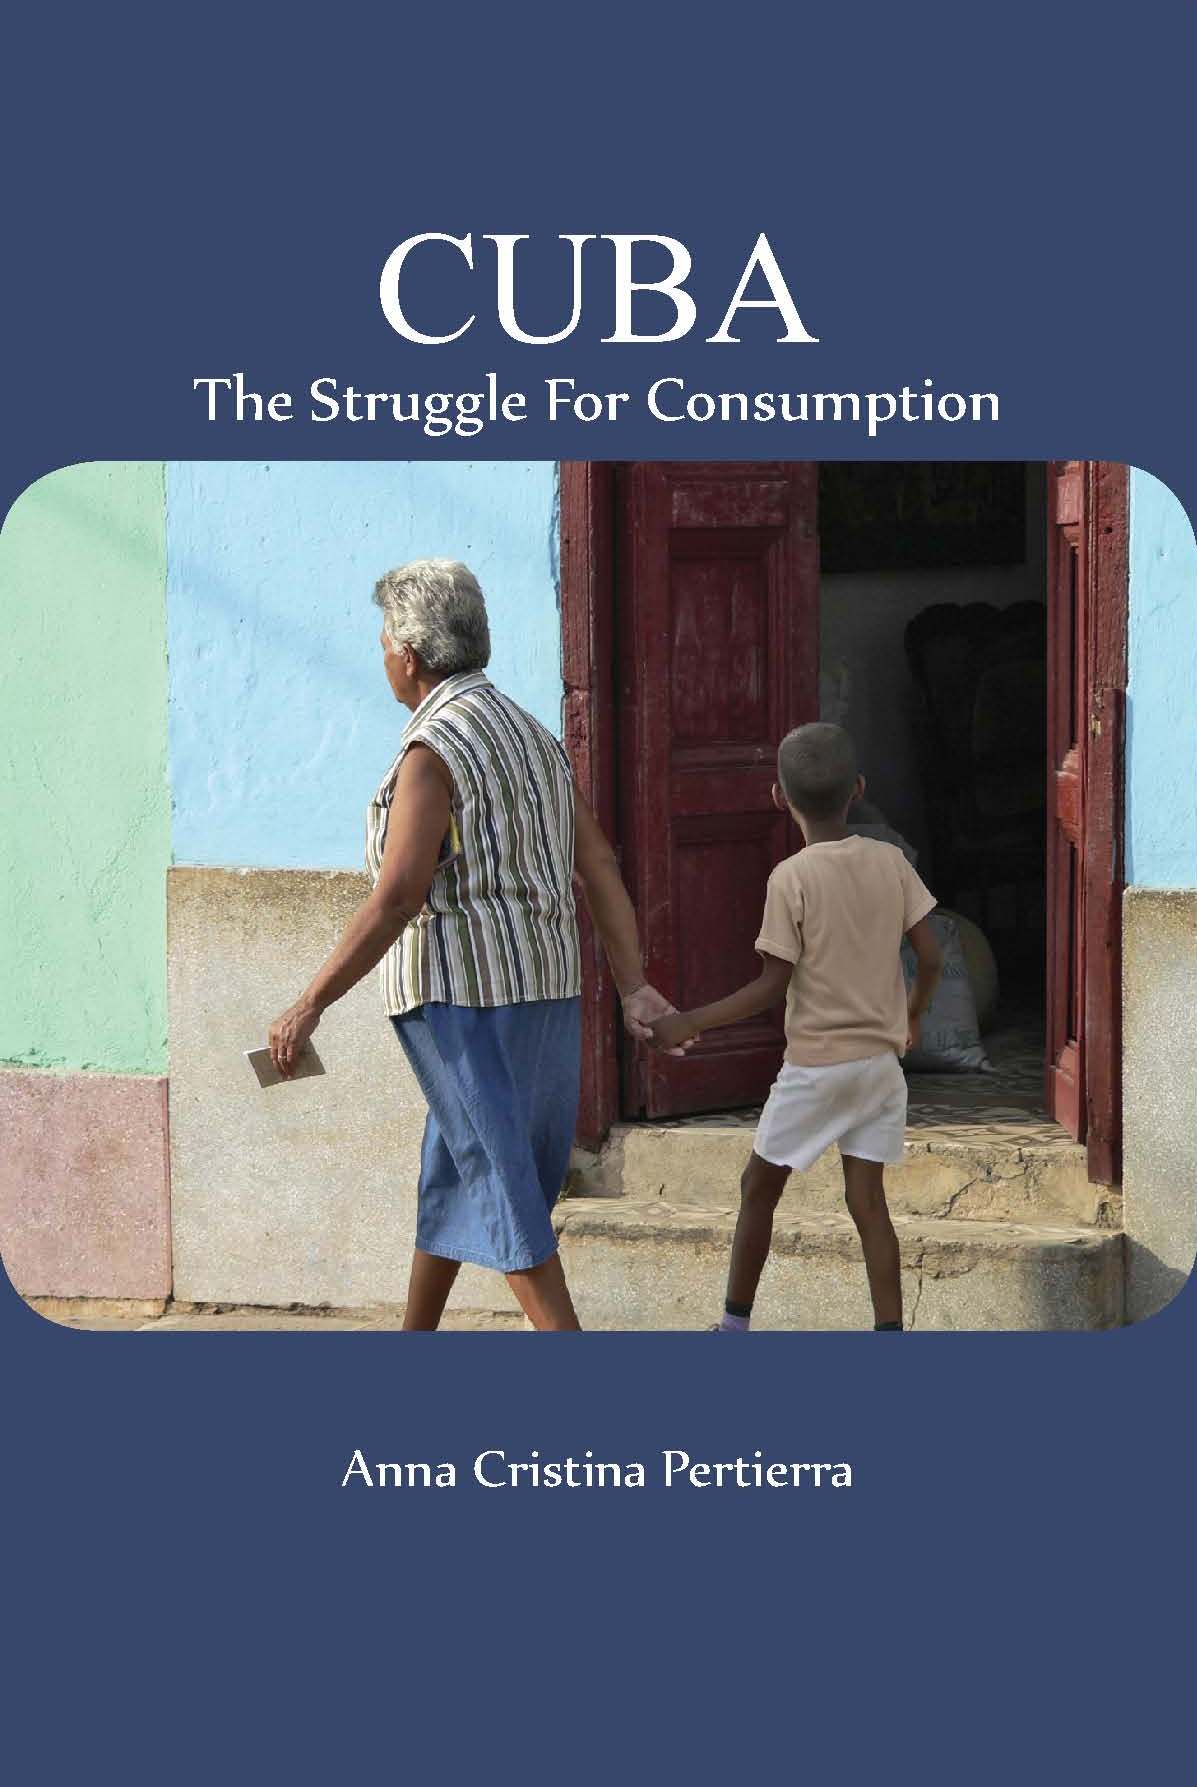 Cuba: The Struggle For Consumption